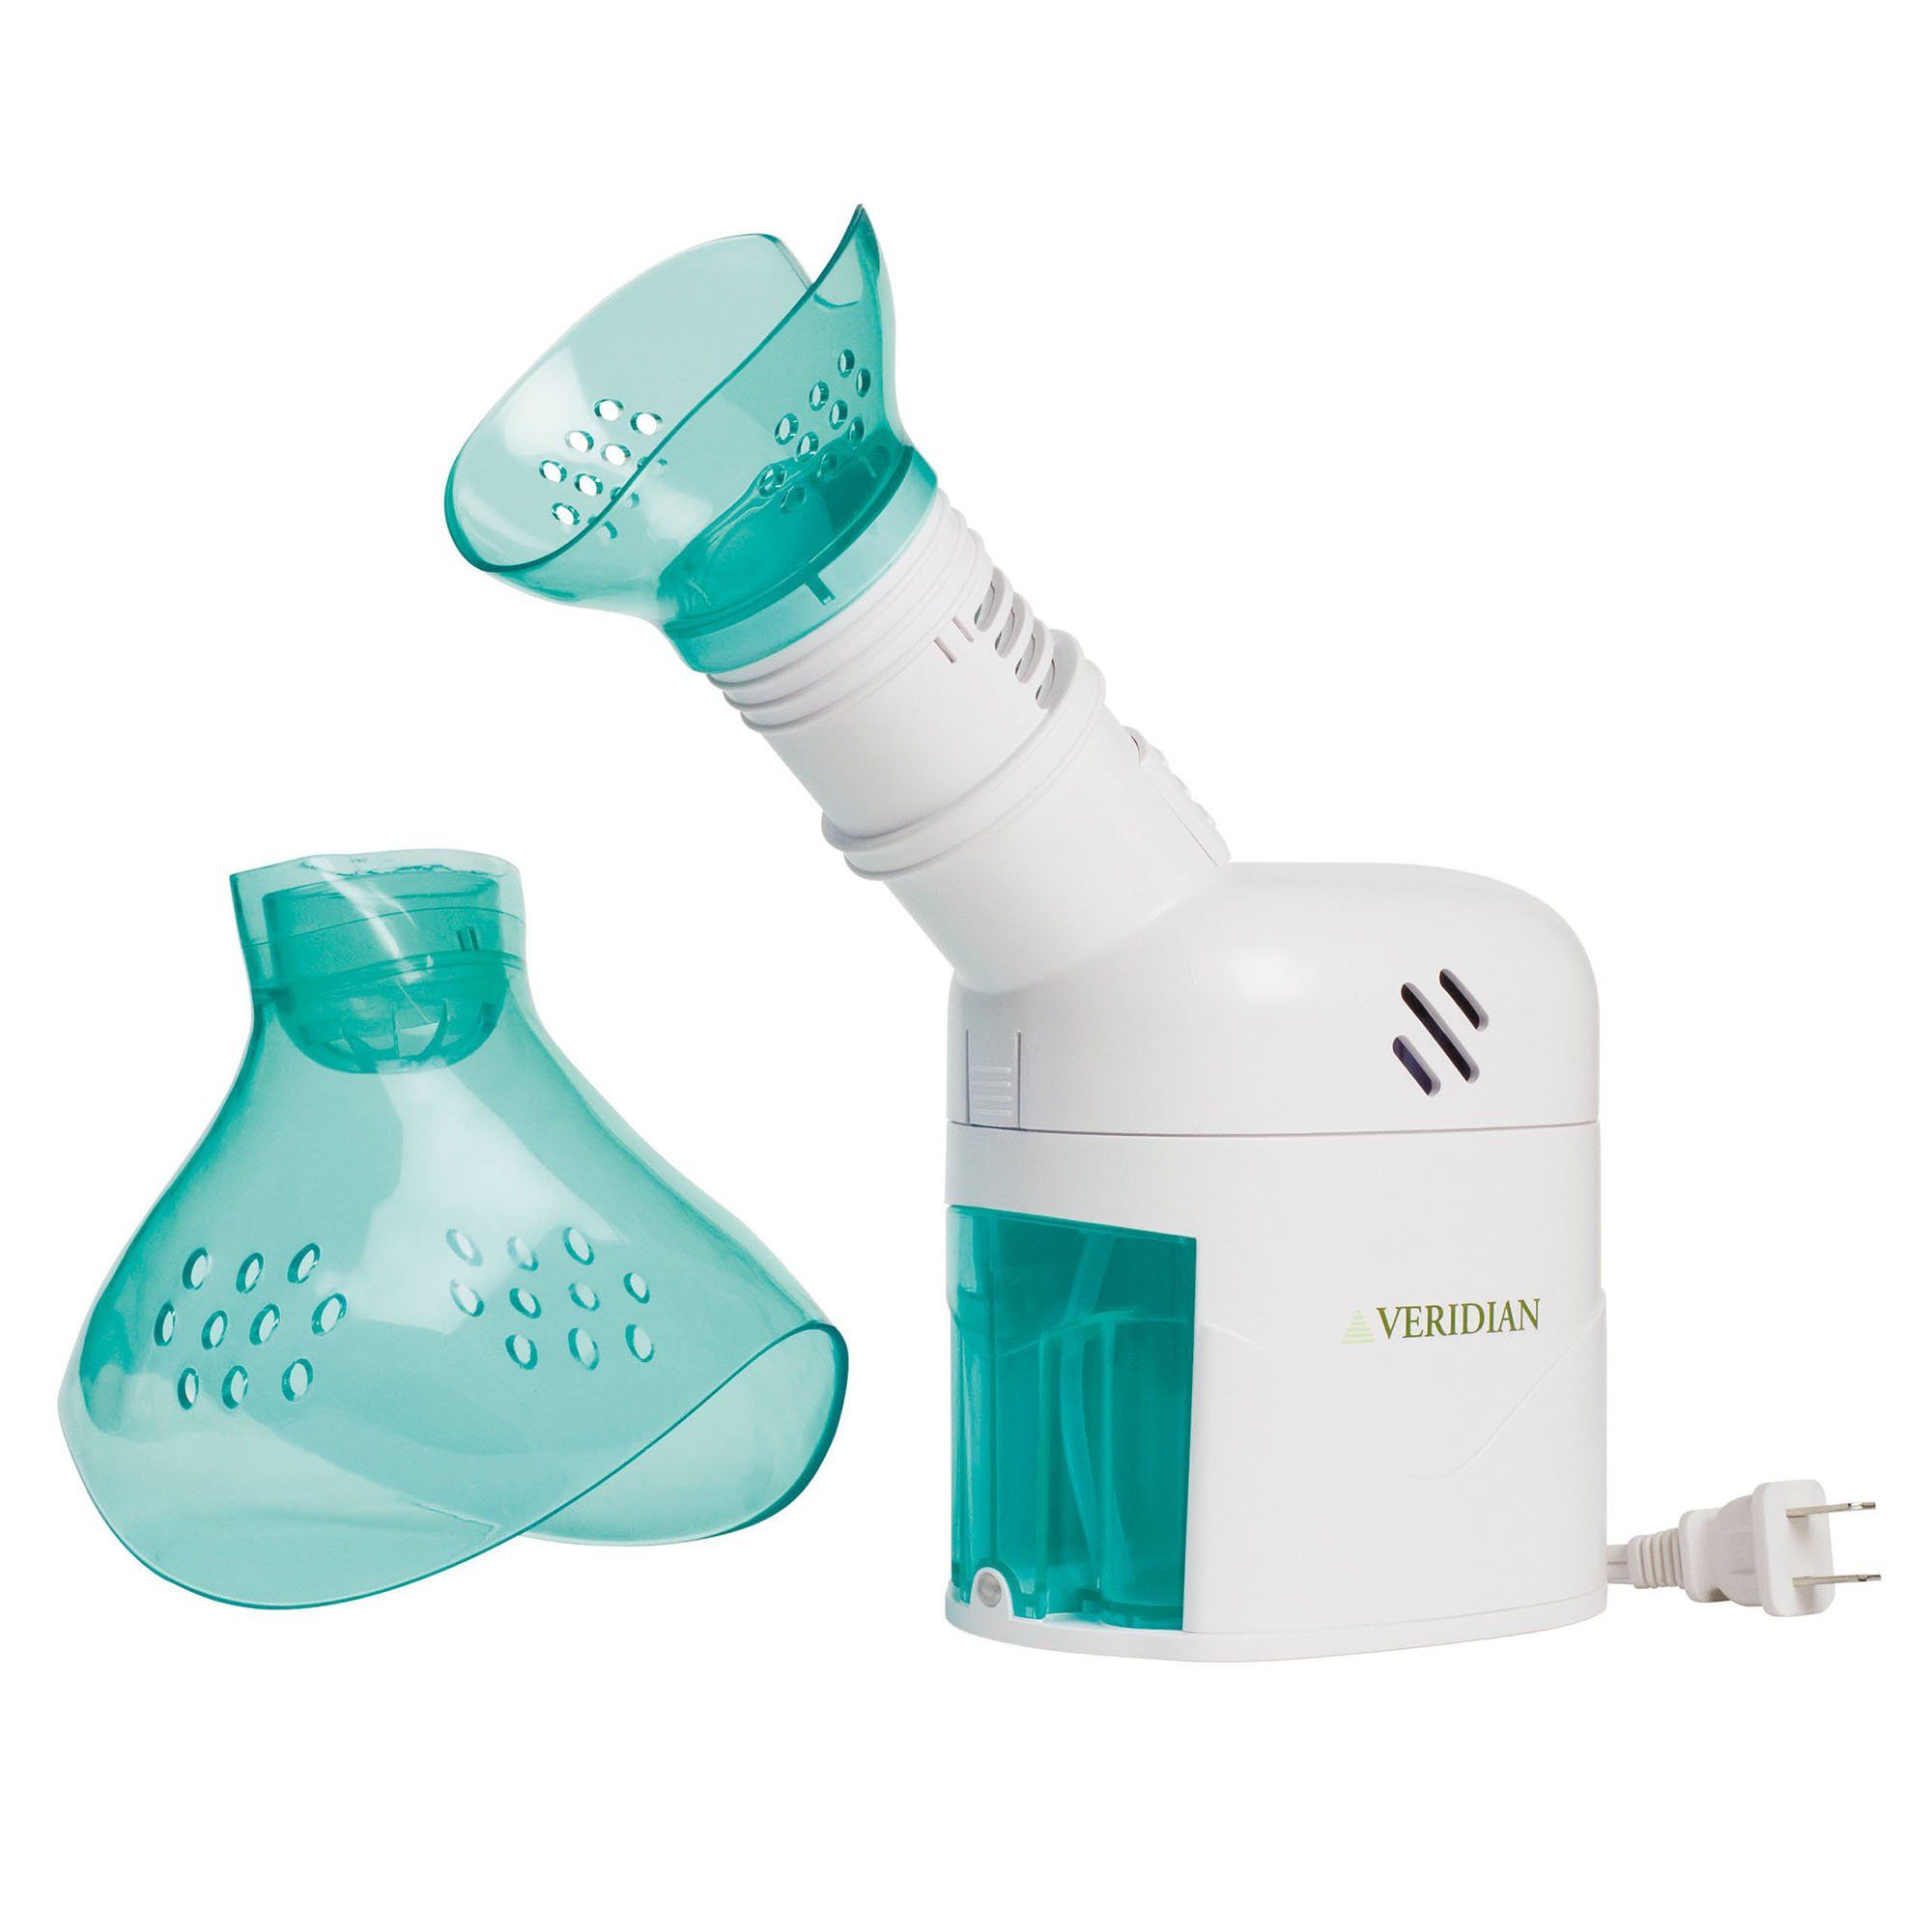 Veridian Steam Inhaler Respiratory Vapor Therapy